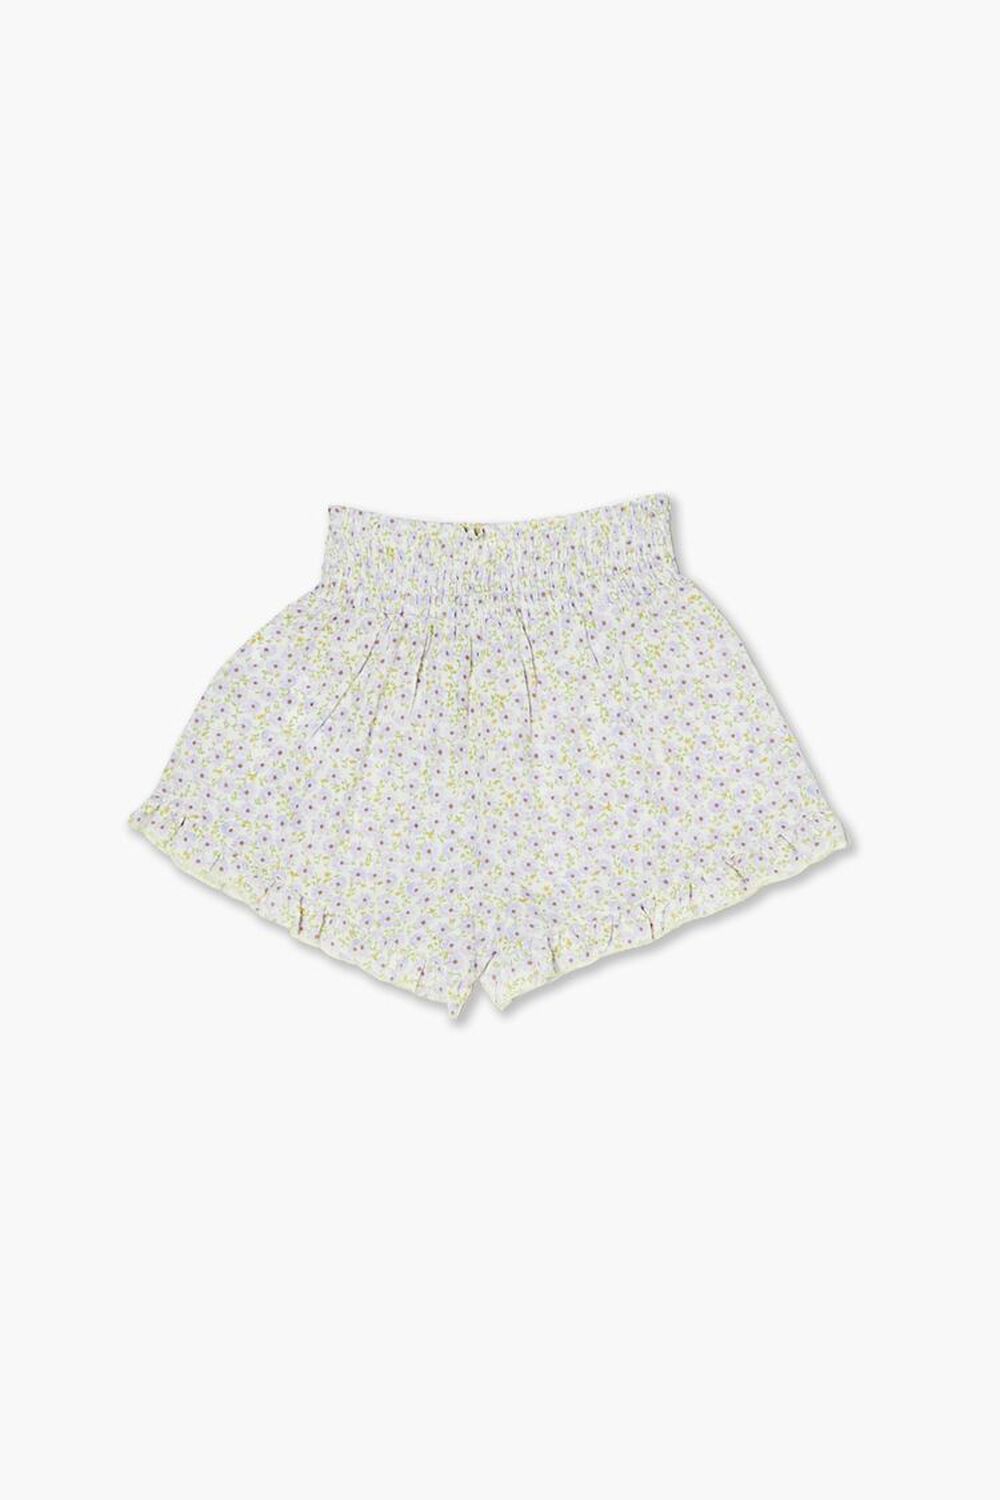 CREAM/MULTI Girls Floral Print Shorts (Kids), image 2